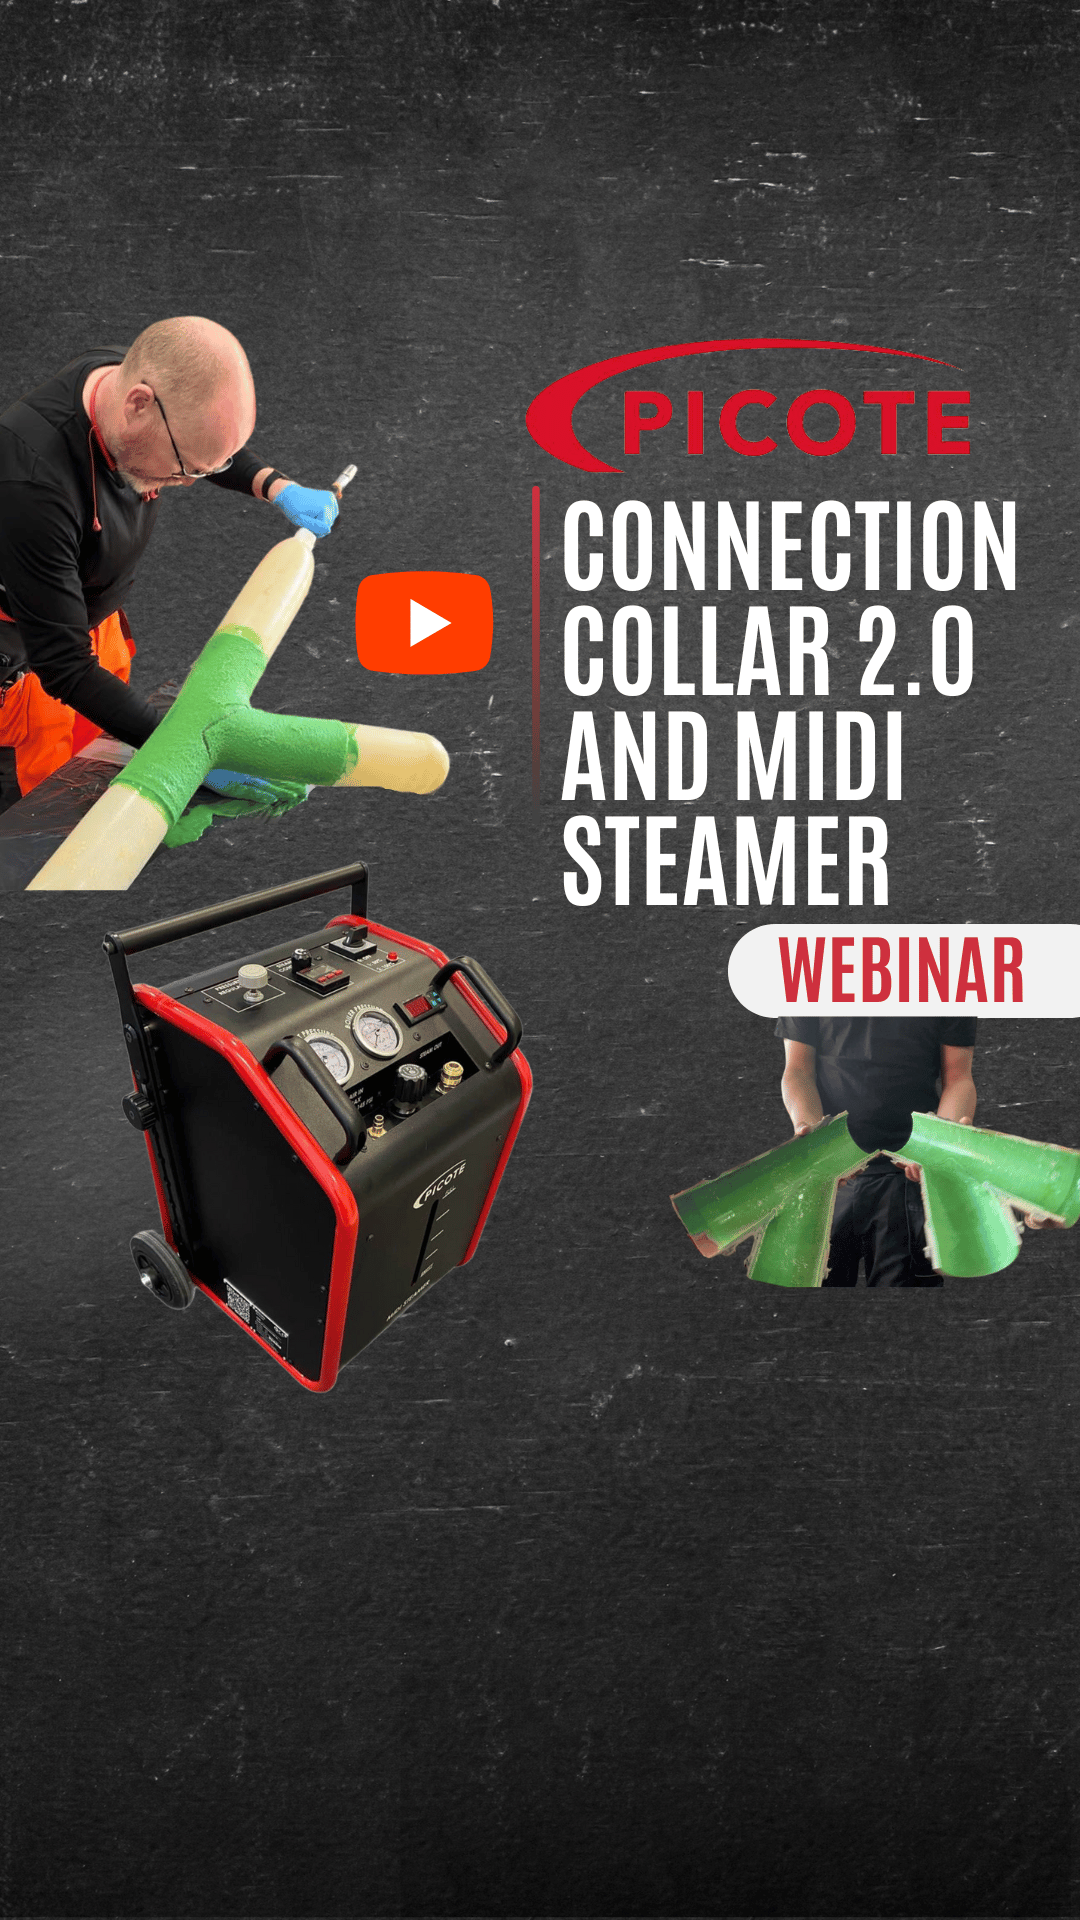 Connection Collar 2.0 and midi steamer webinar 